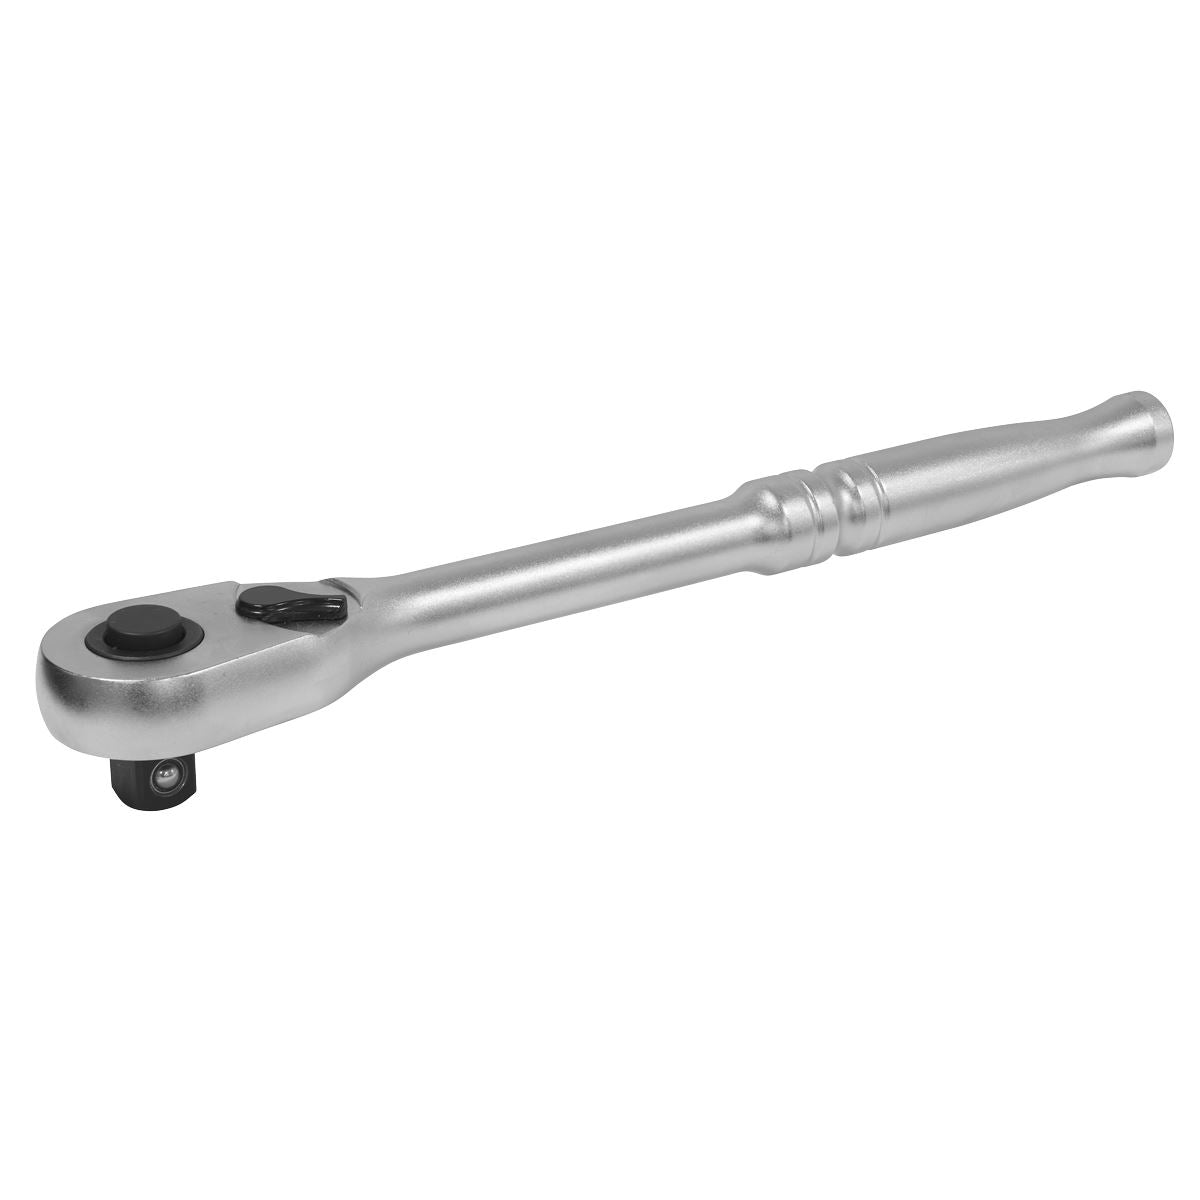 Sealey Premier Ratchet Wrench 1/2"Sq Drive 90-Tooth Flip Reverse -Premier Platinum Series